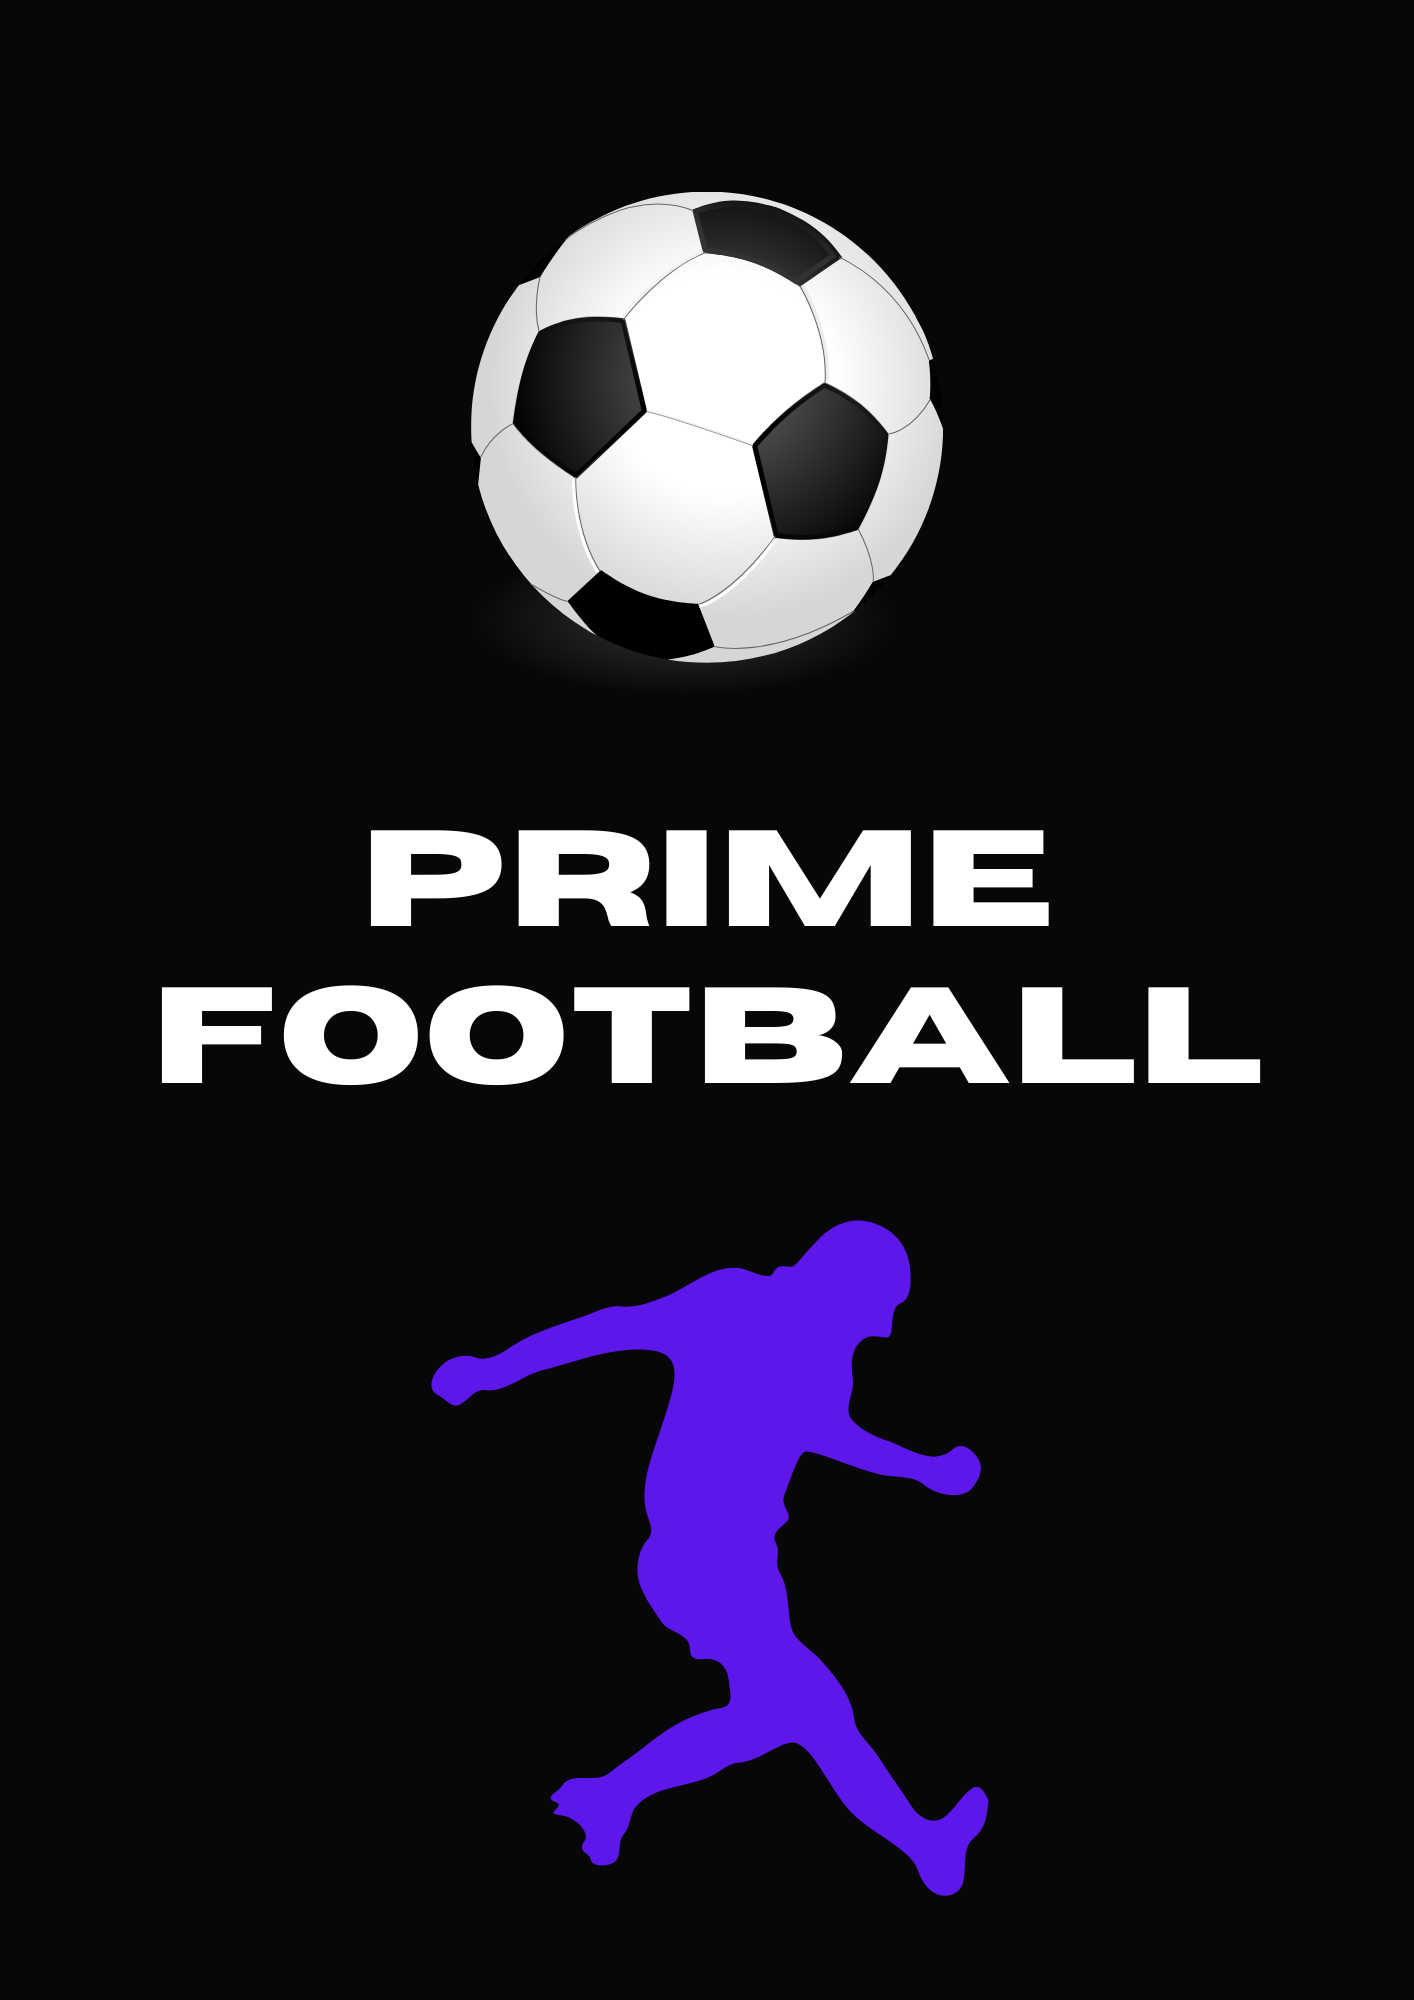 Prime Football